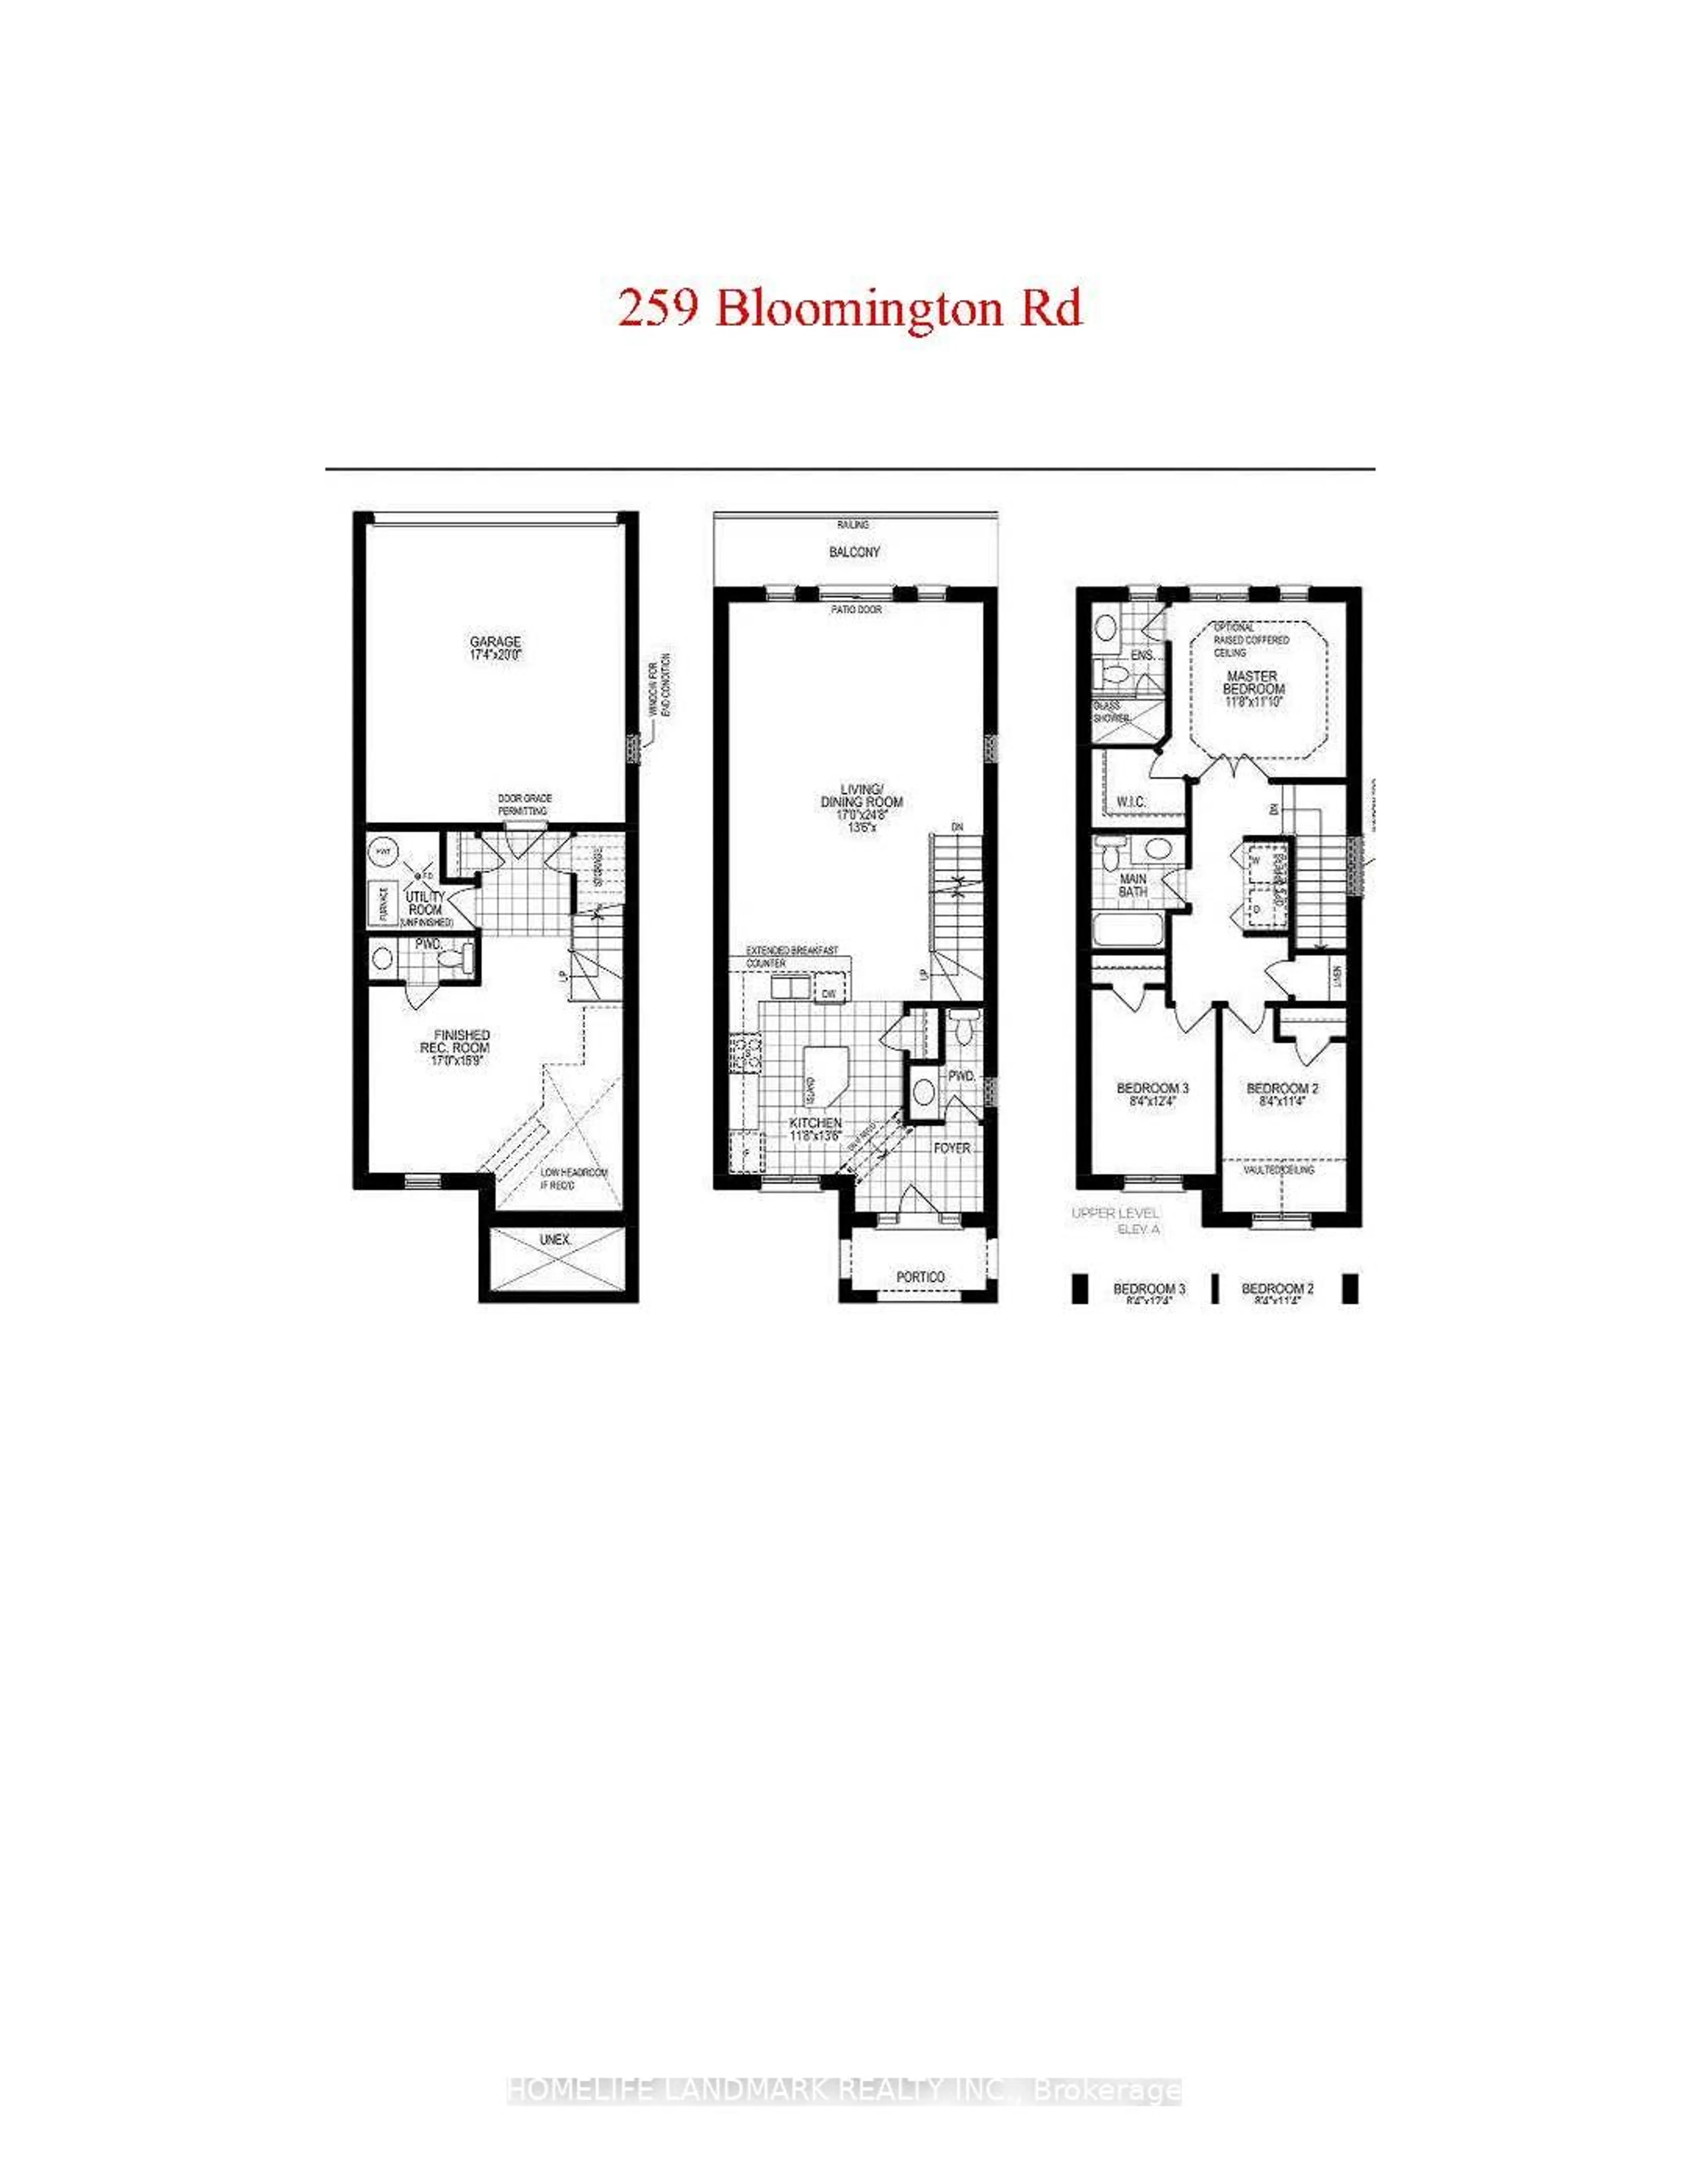 Floor plan for 259 Bloomington Rd, Richmond Hill Ontario L4E 1G4